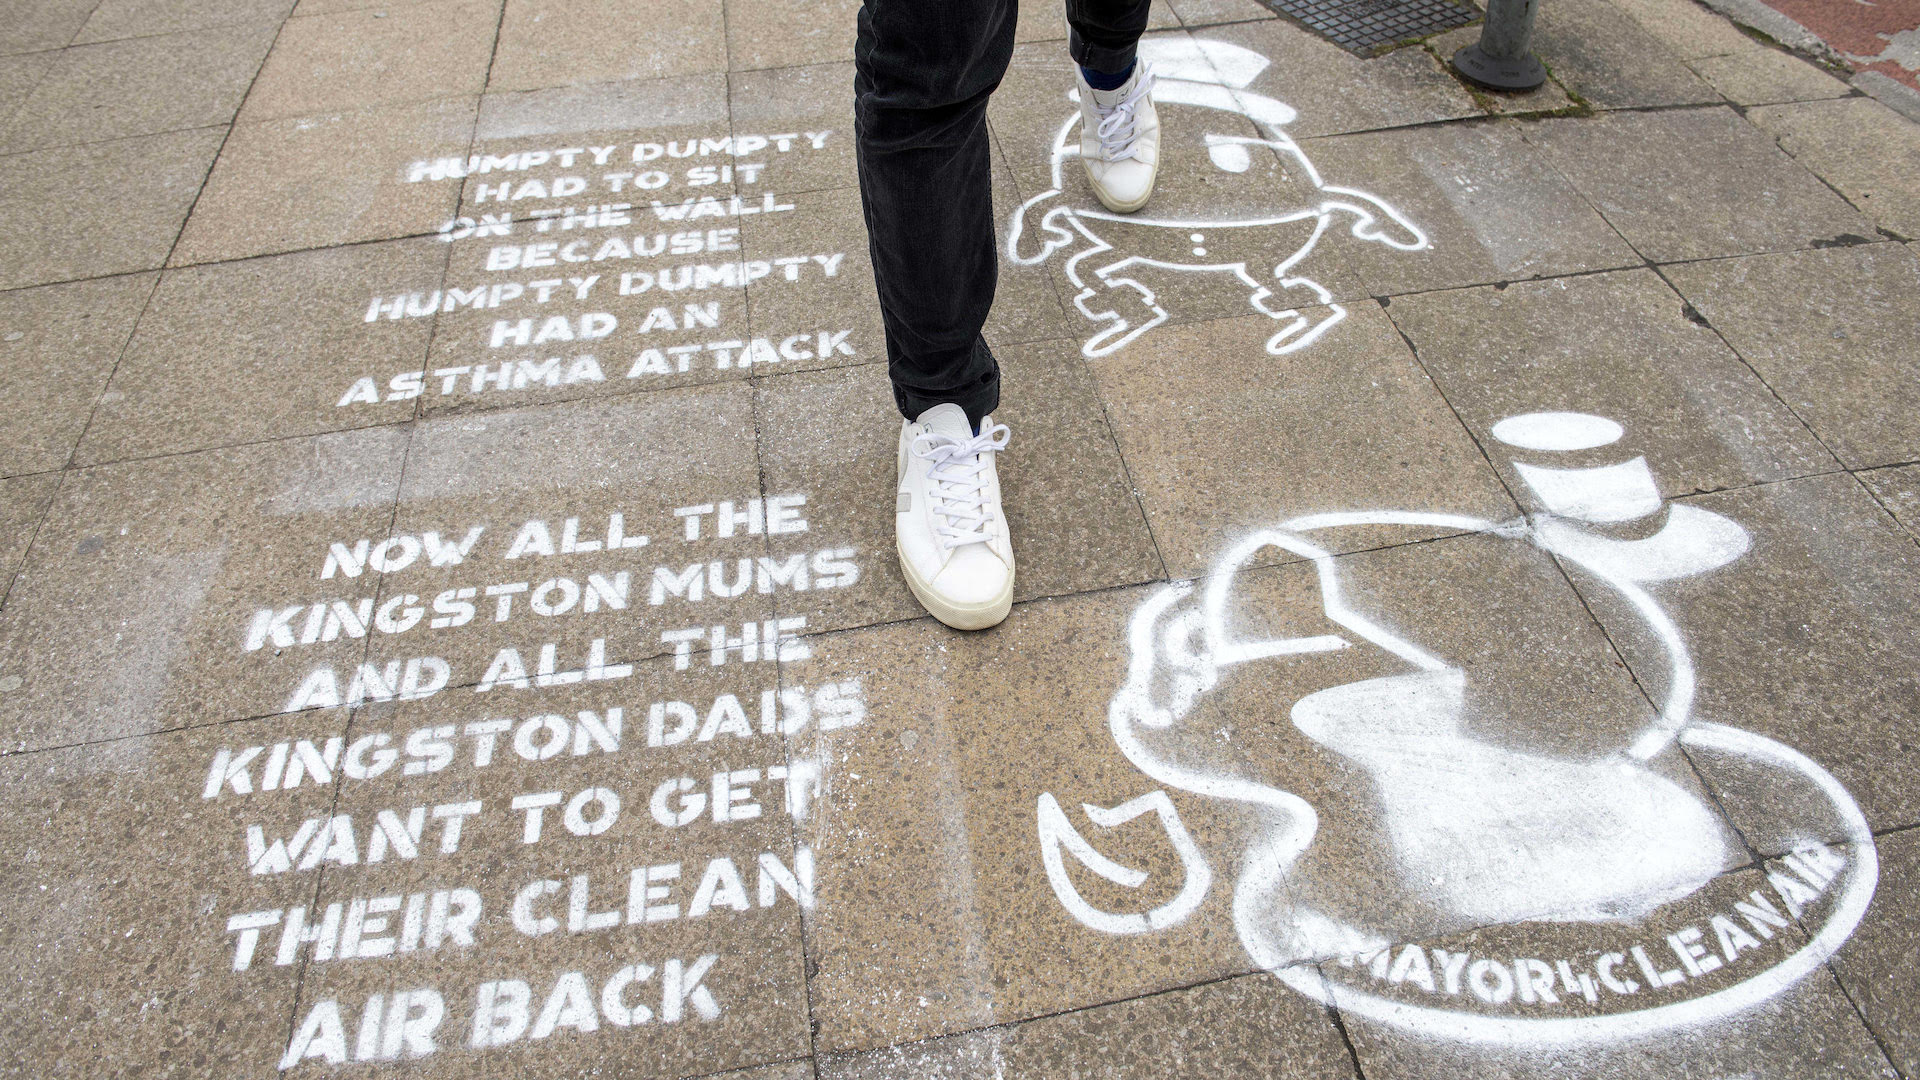 The Mums for Longs air pollution graffiti stencil outside Kingston rail station